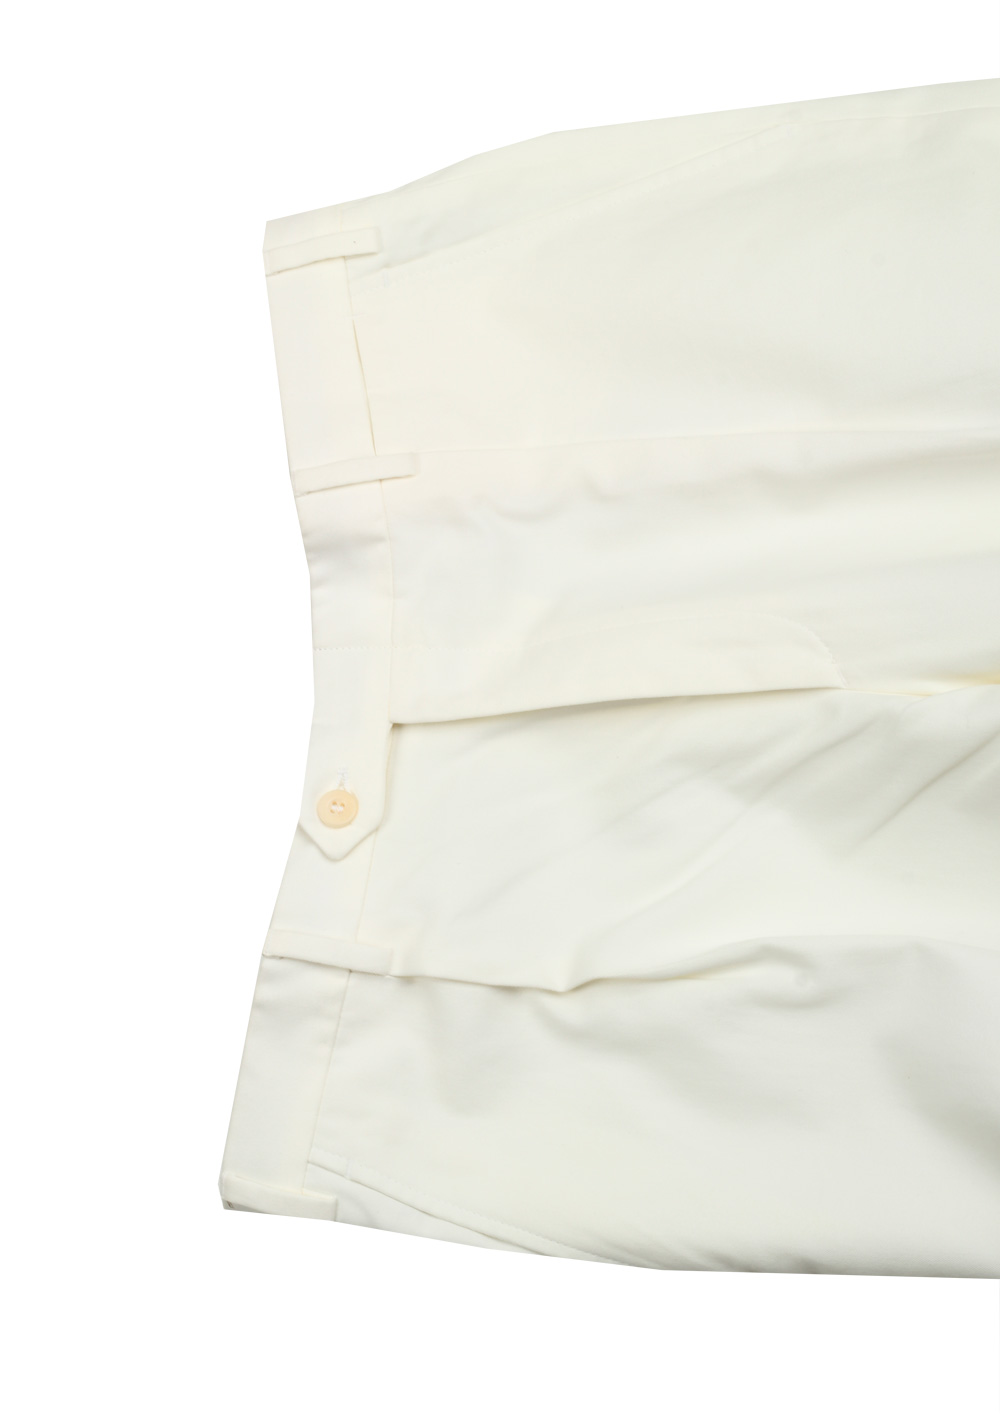 Brioni Off White Trousers Size 46 / 30 U.S. | Costume Limité